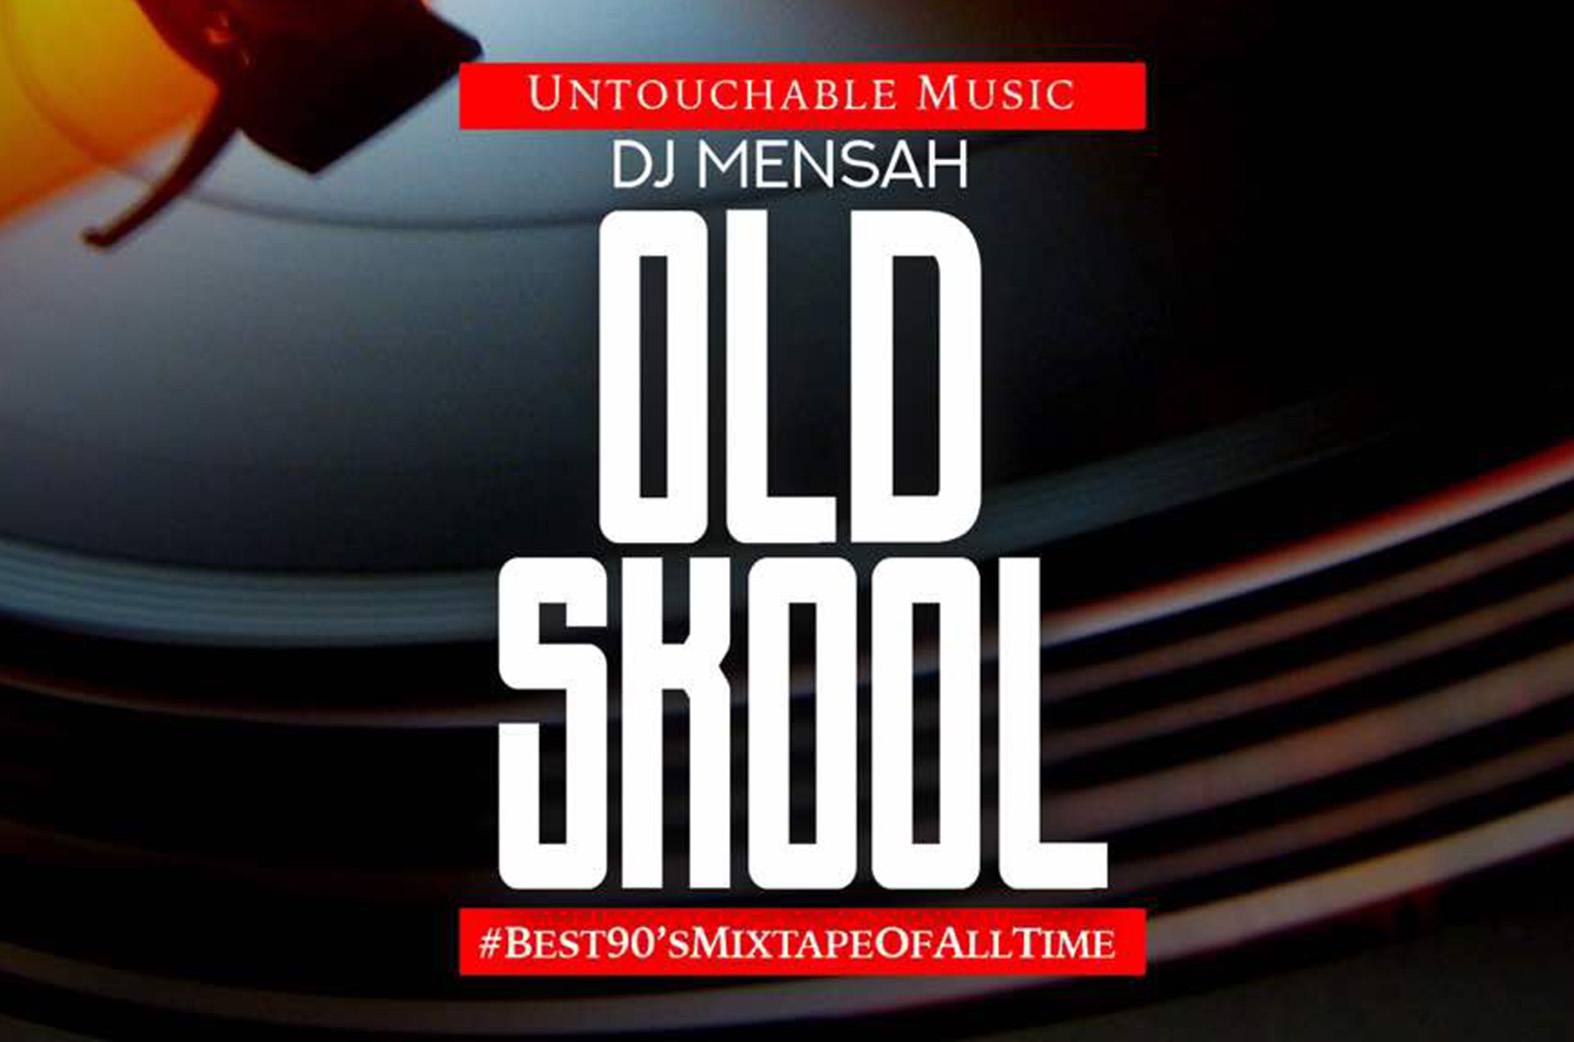 DJ Mensah drops 90’s Mixtape this Friday